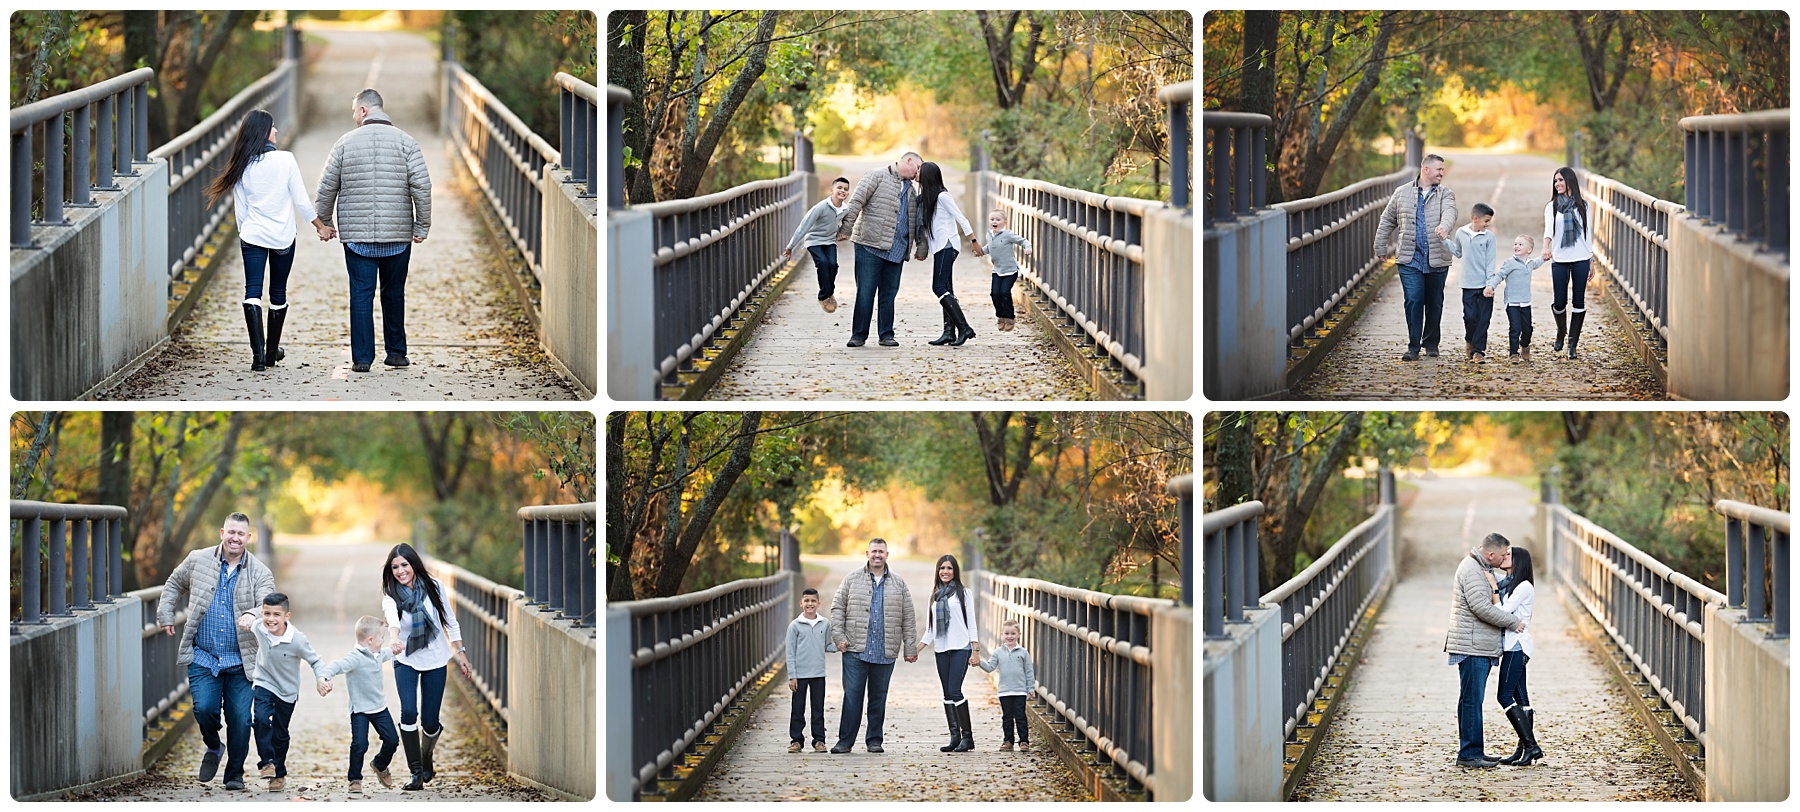 family walking on a bridge